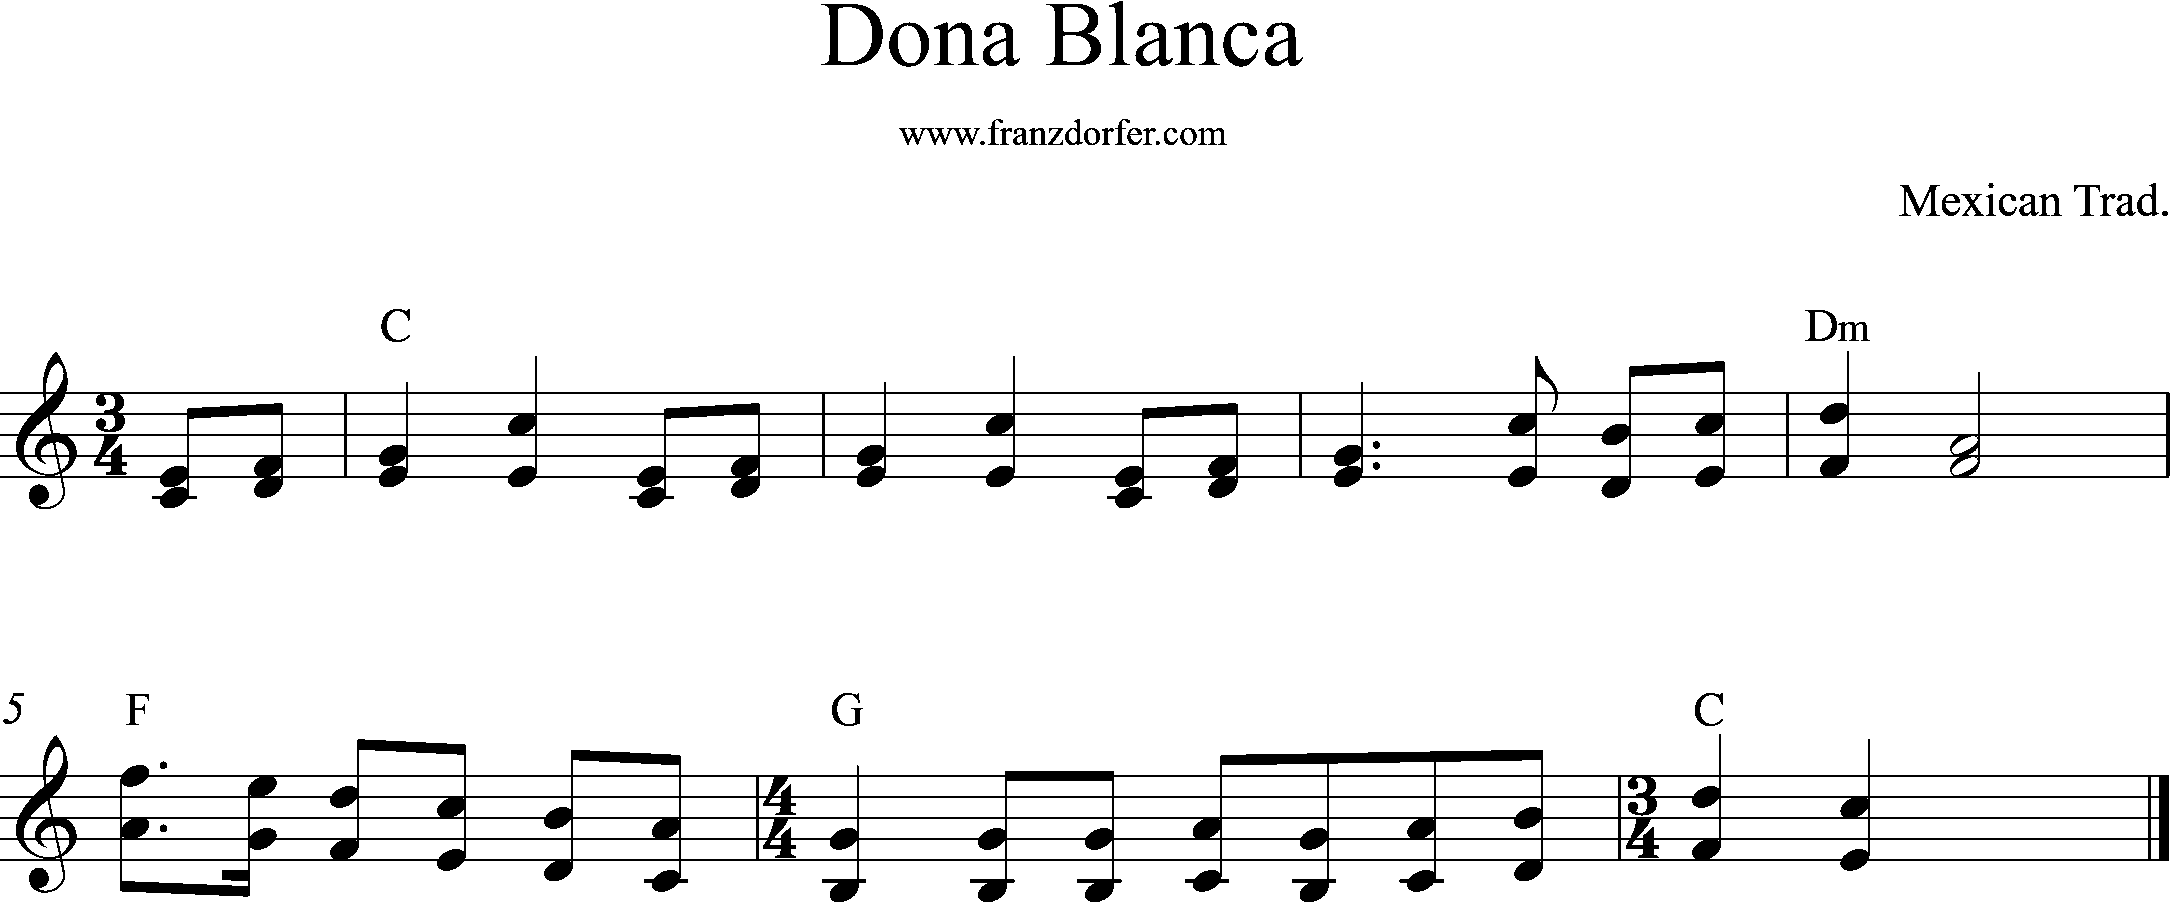 sheet music - G-Major, Dona Blanca